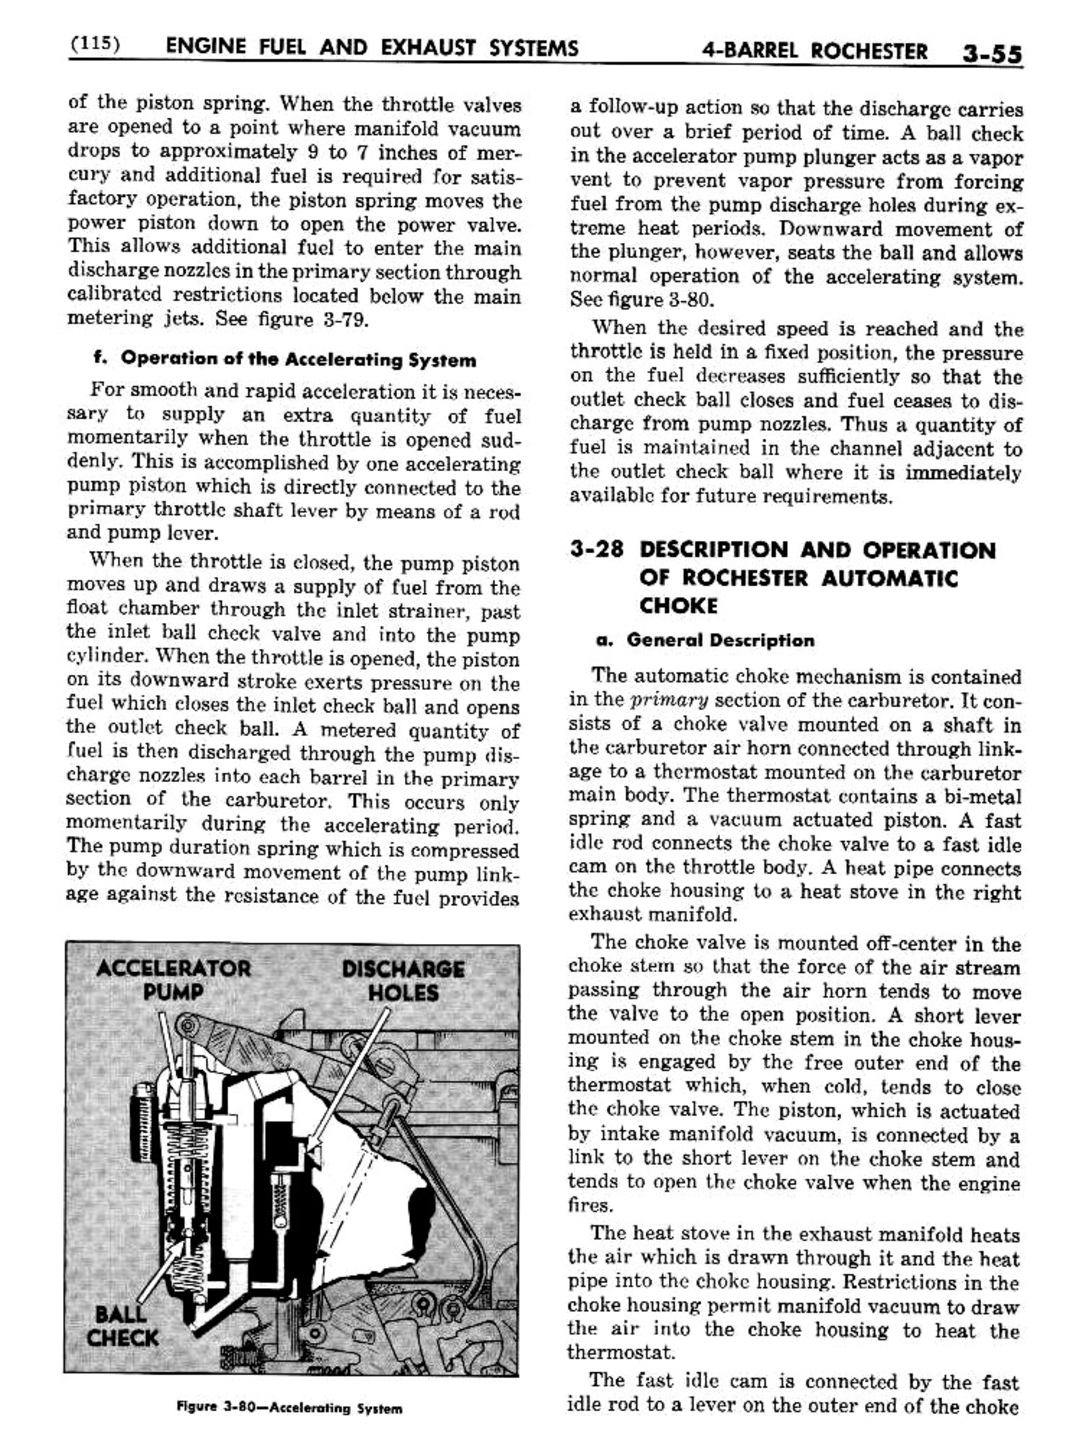 n_04 1956 Buick Shop Manual - Engine Fuel & Exhaust-055-055.jpg